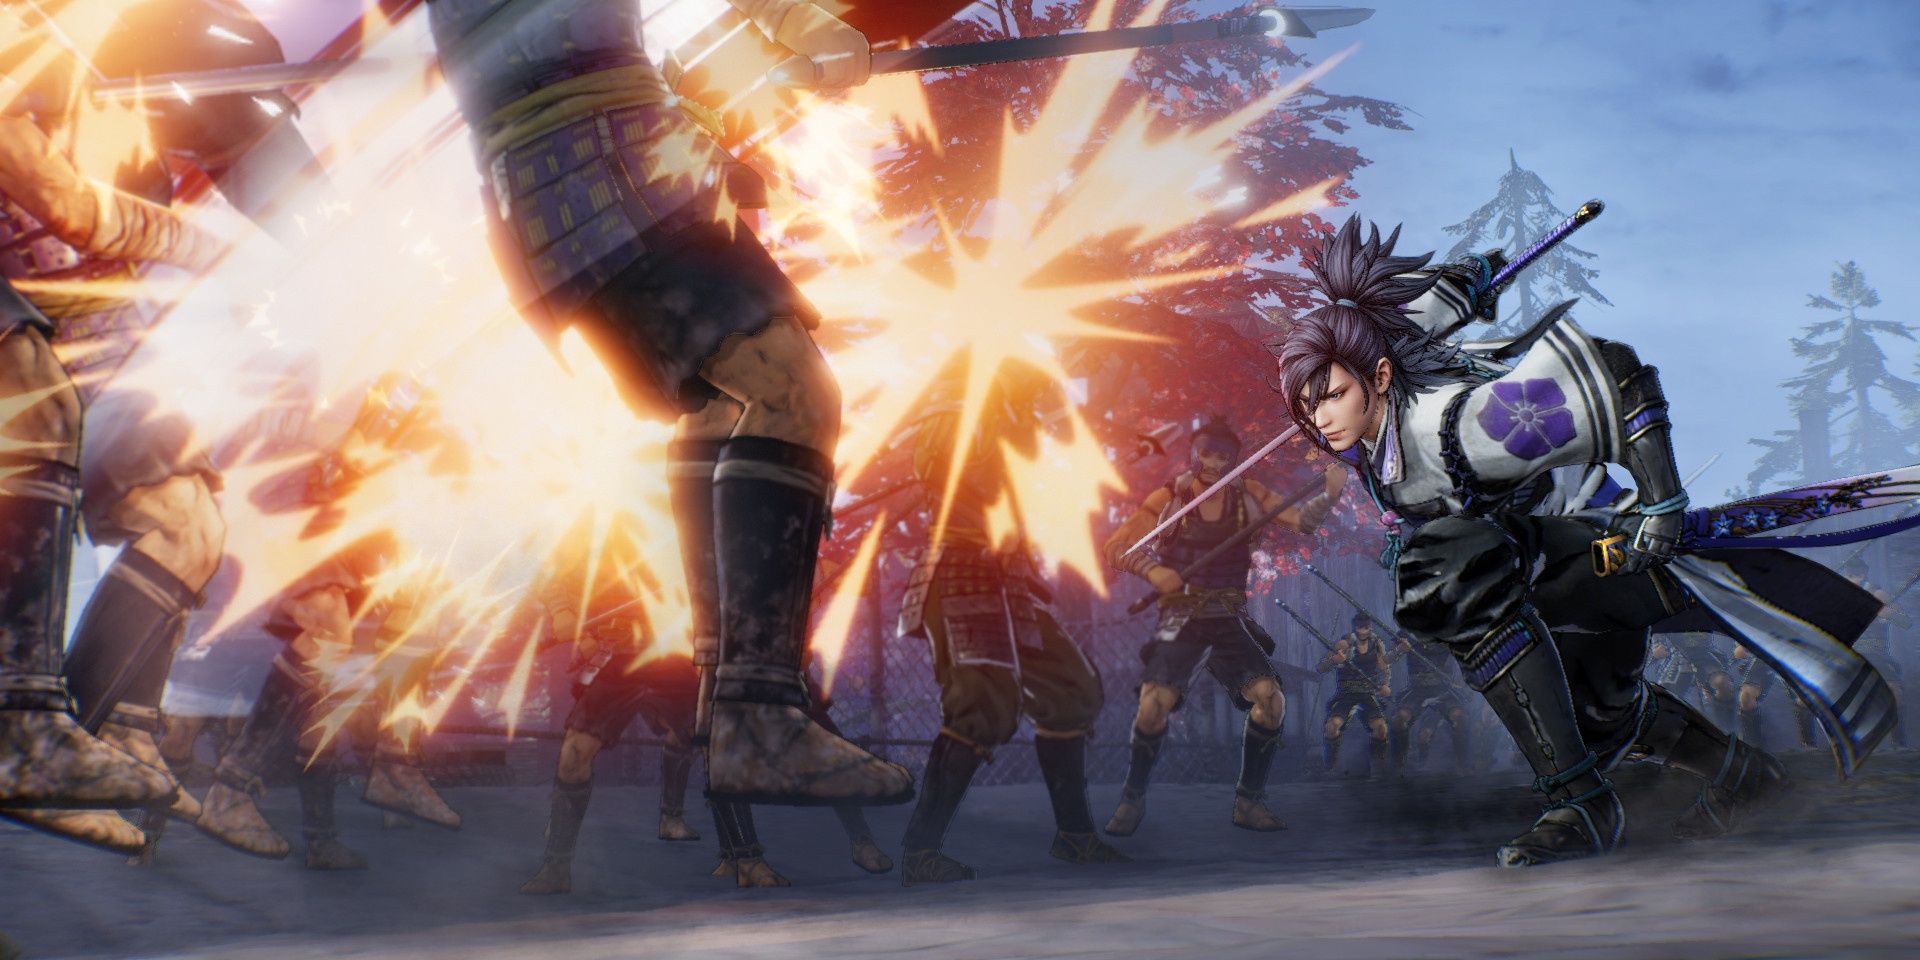 A screenshot showing gameplay in Samurai Warriors 5